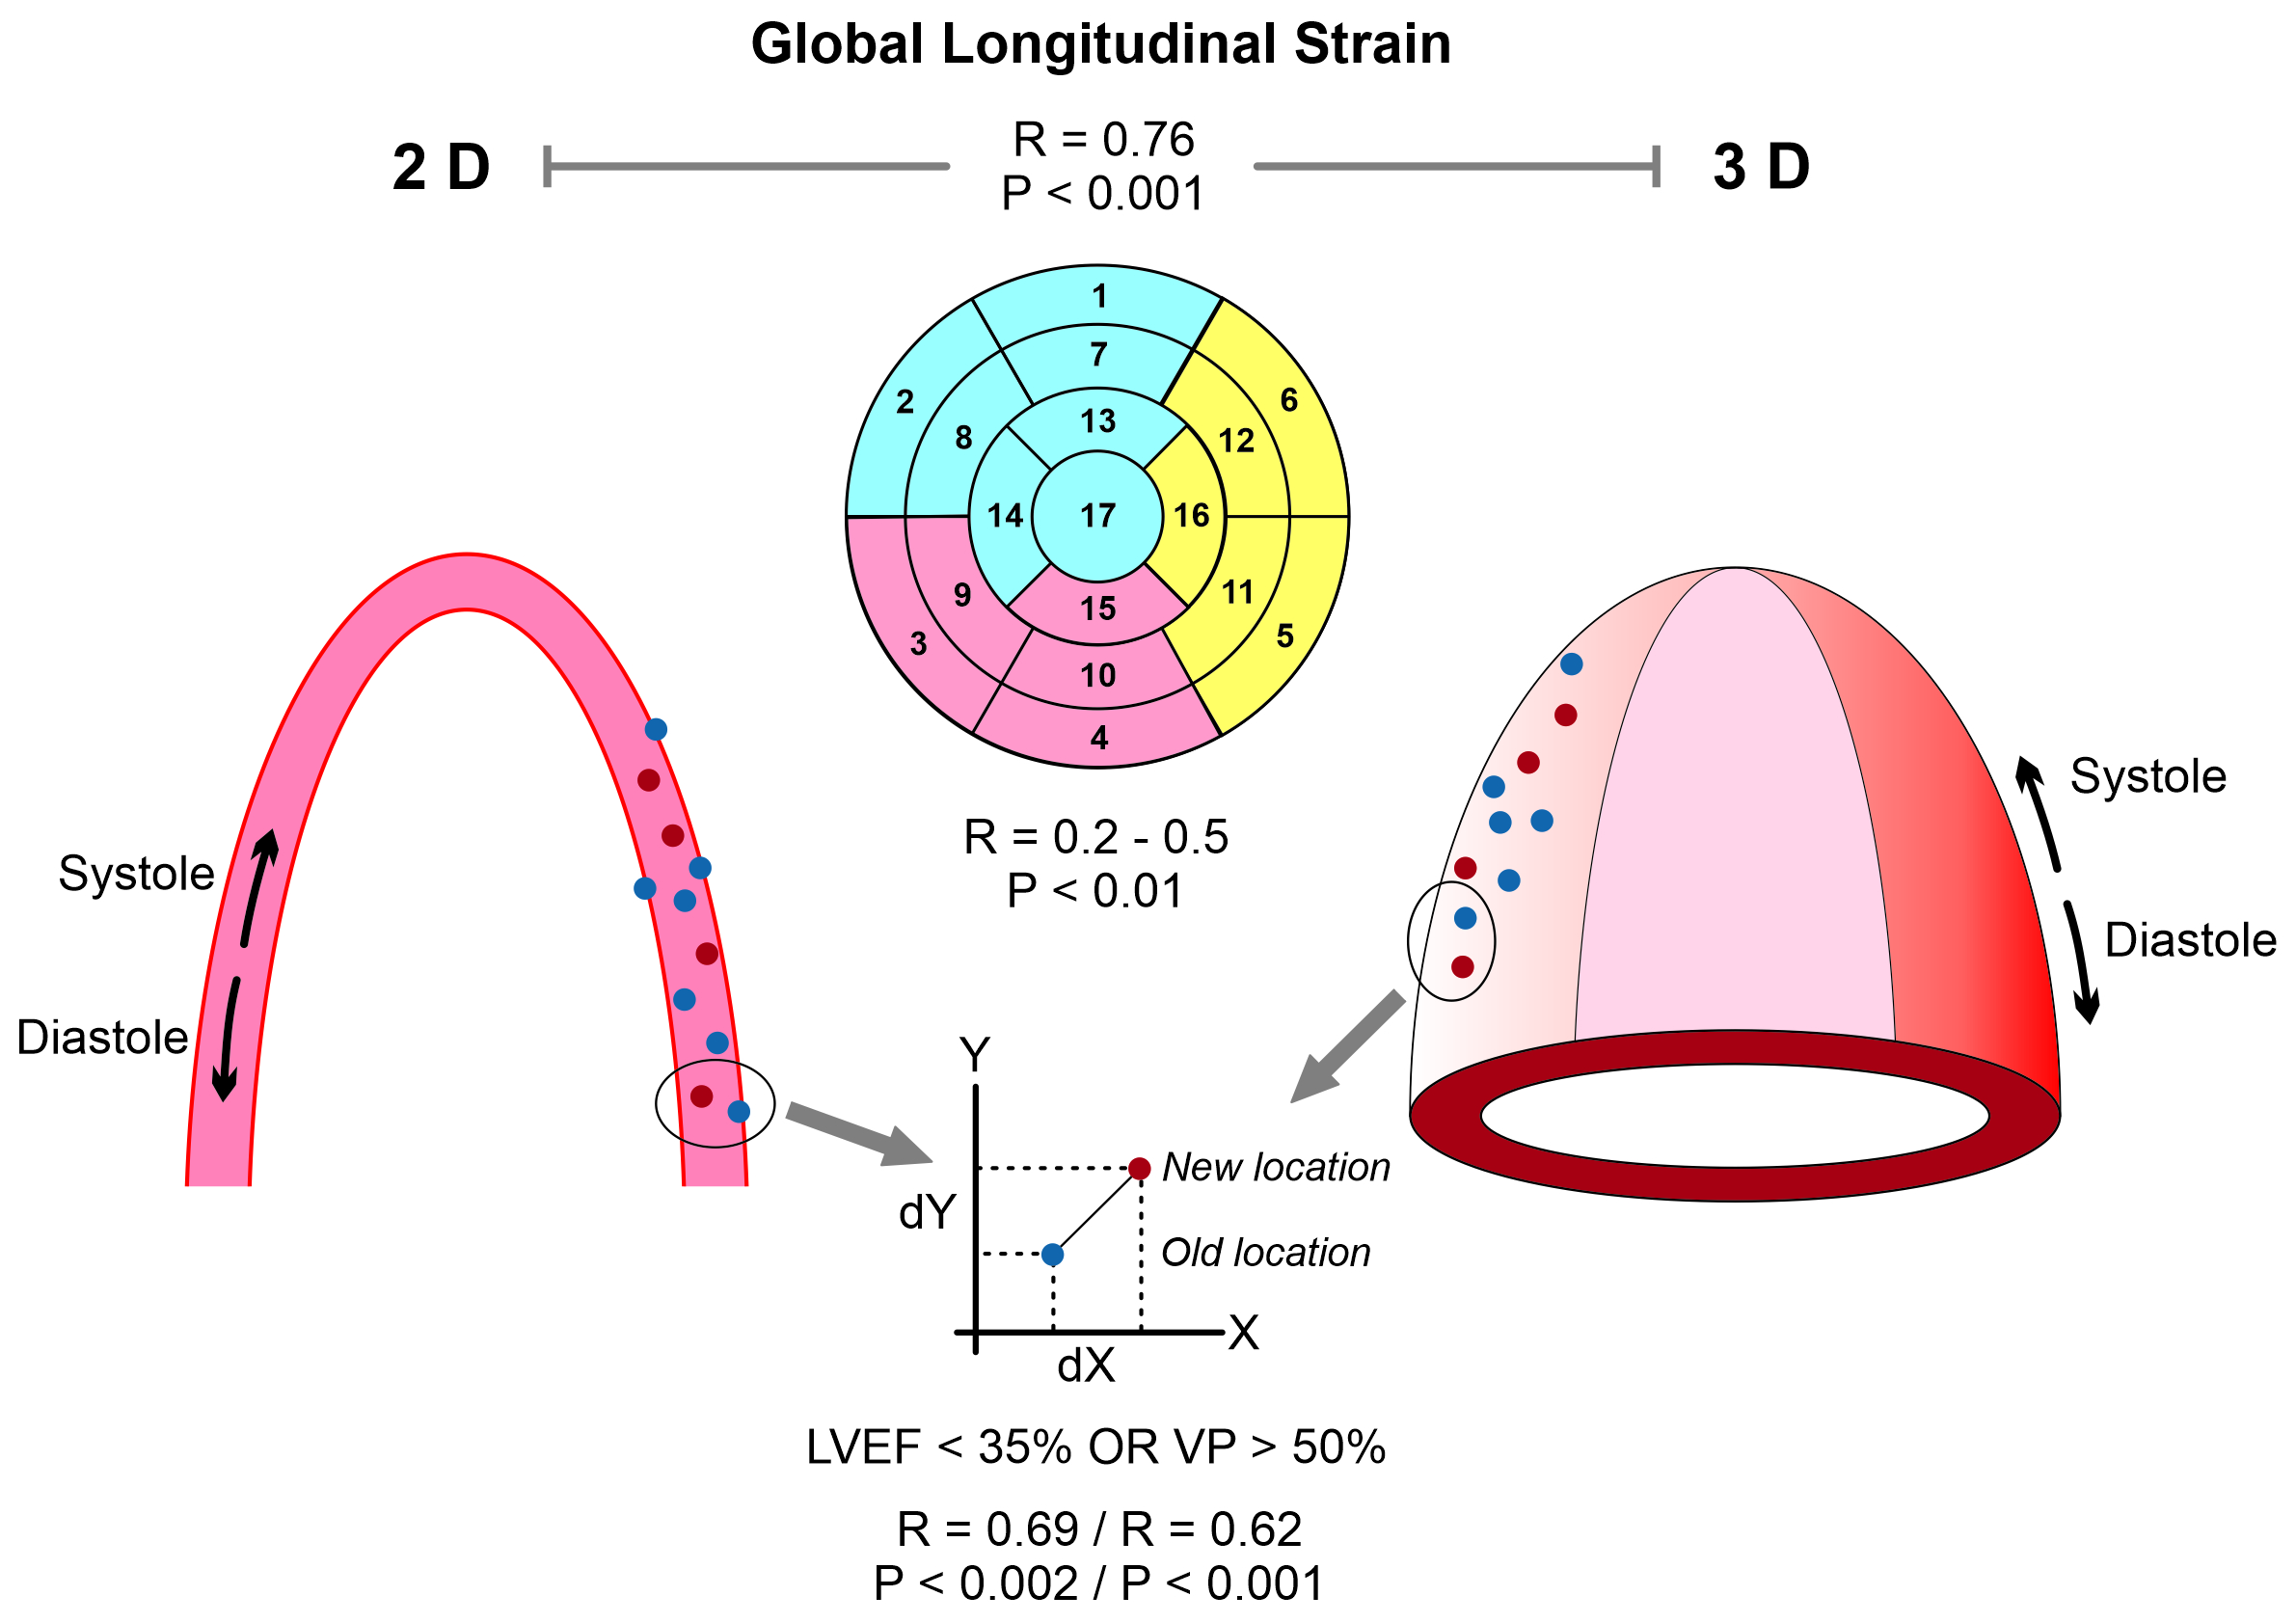 speckle tracking global longitudinal strain